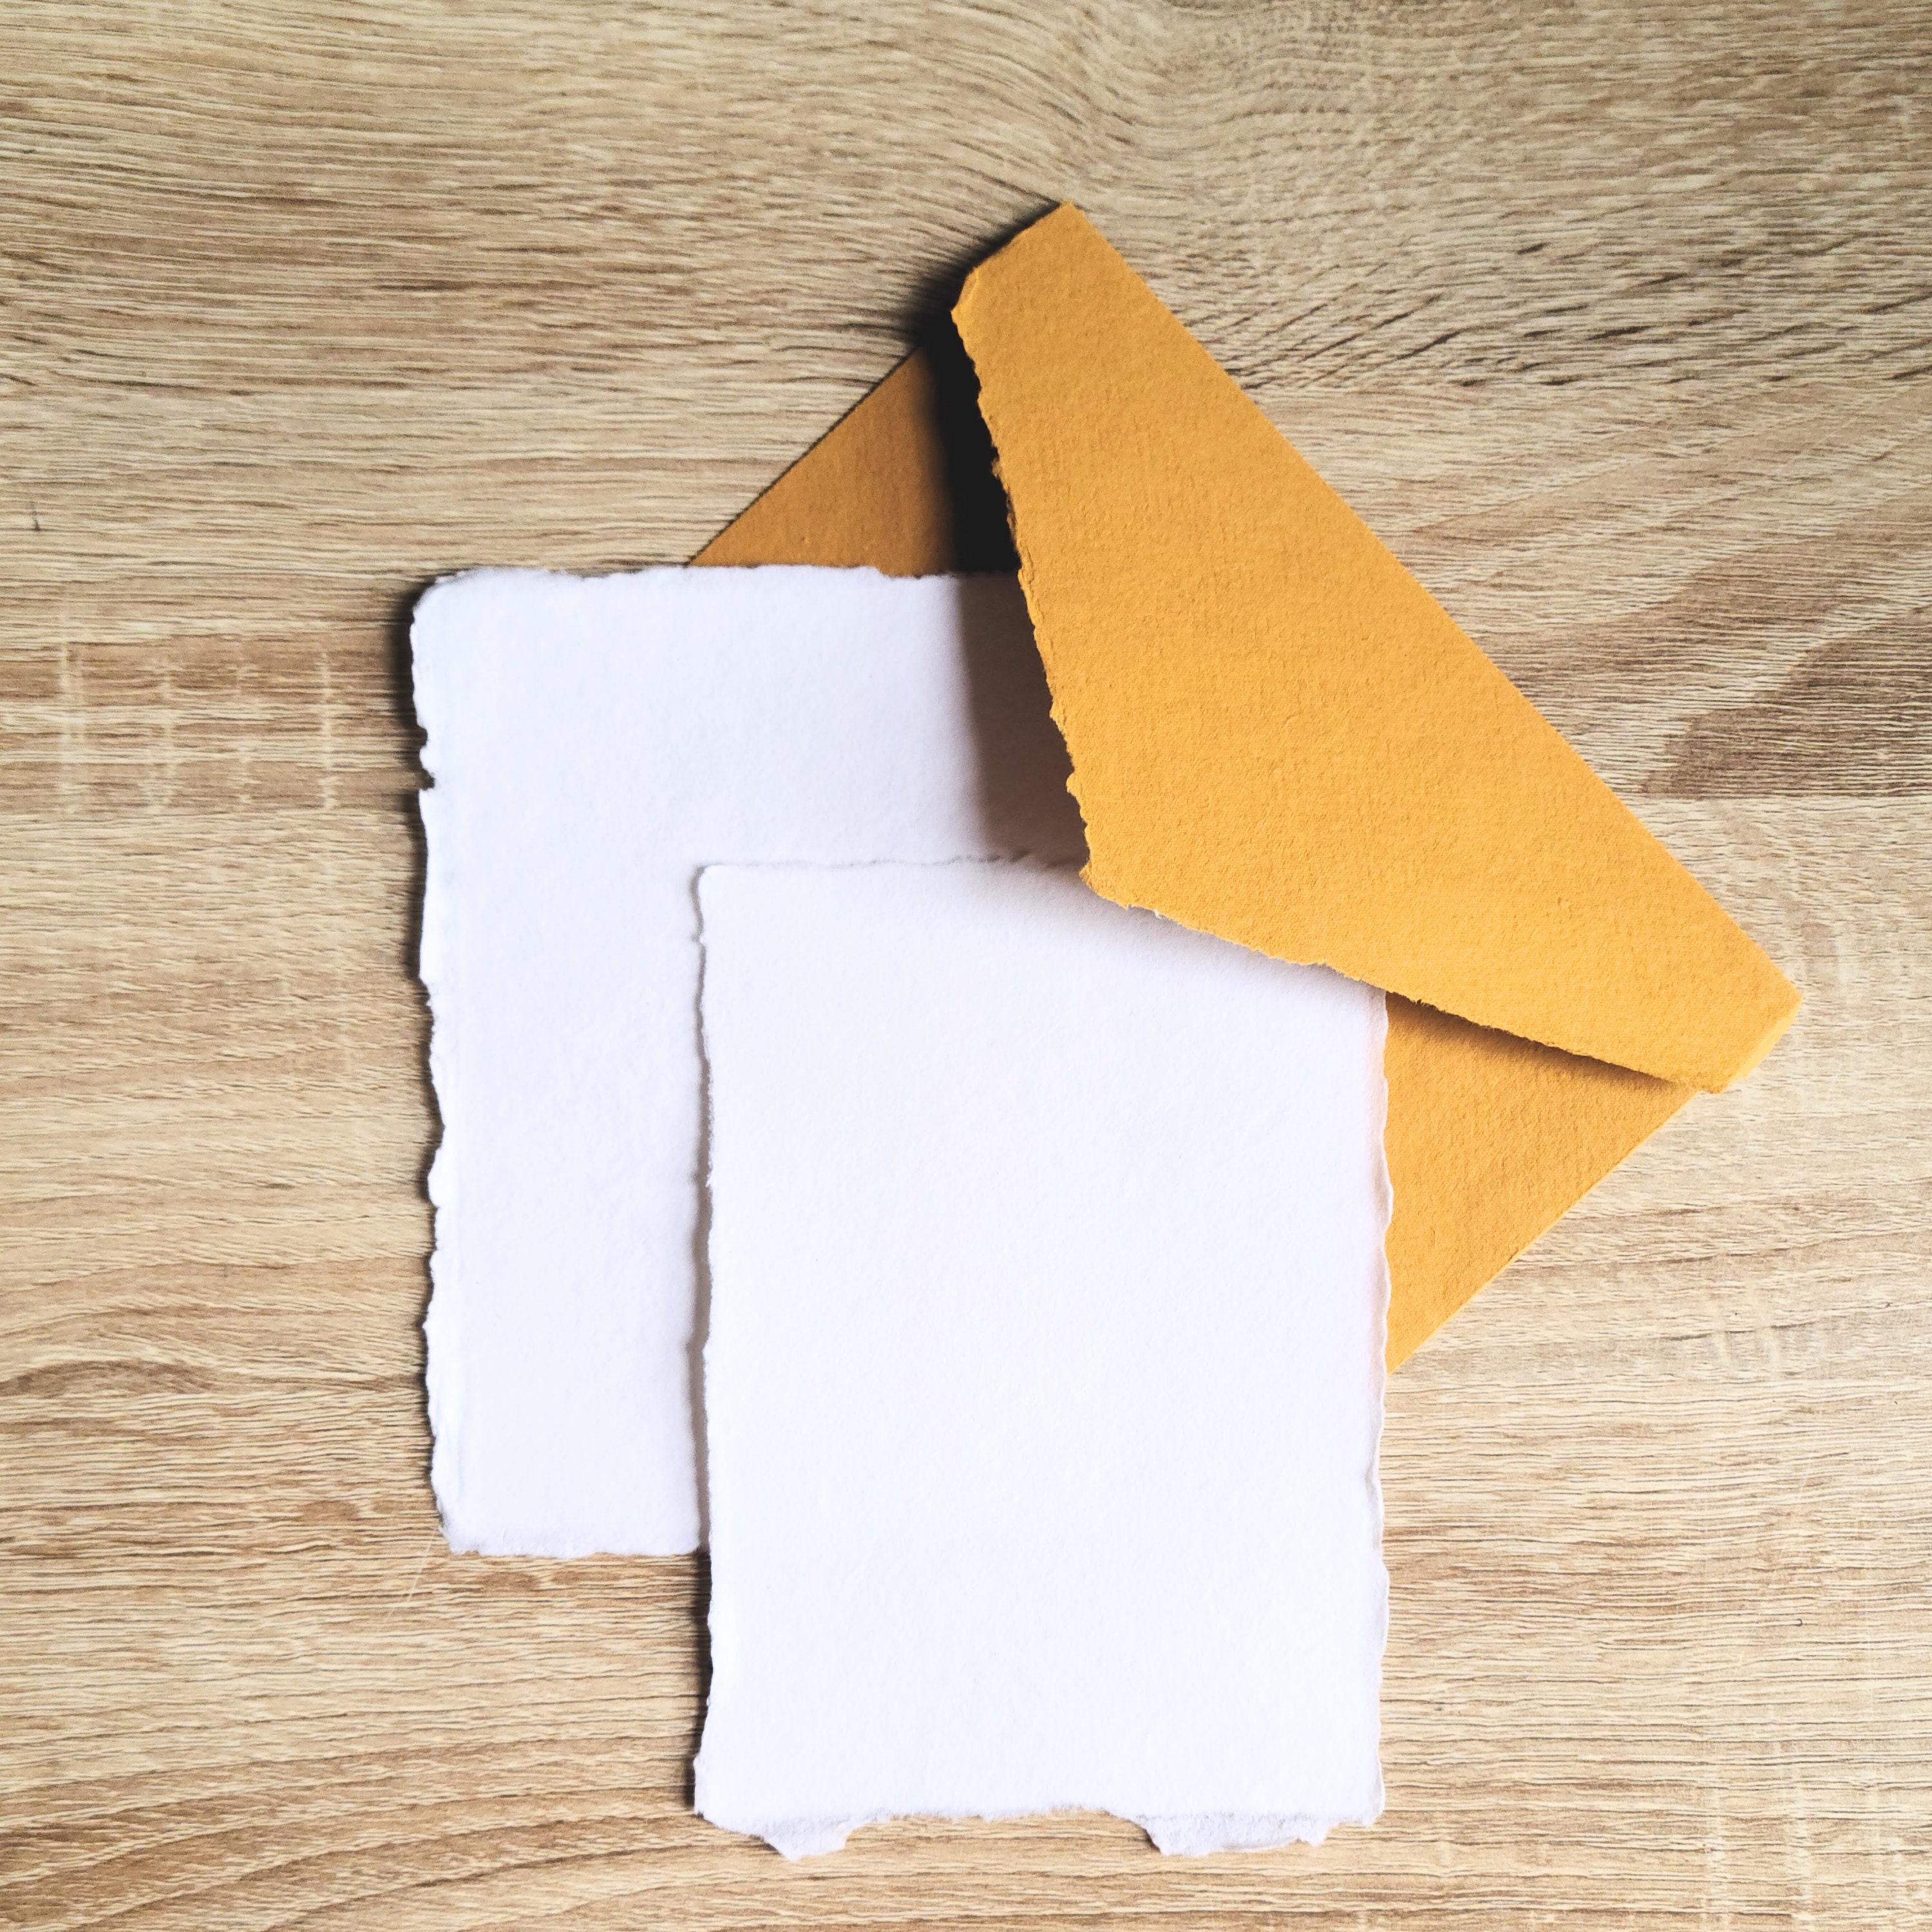 20 A4 150gsm Cotton Rag, Khadi White Handmade Paper Sheets